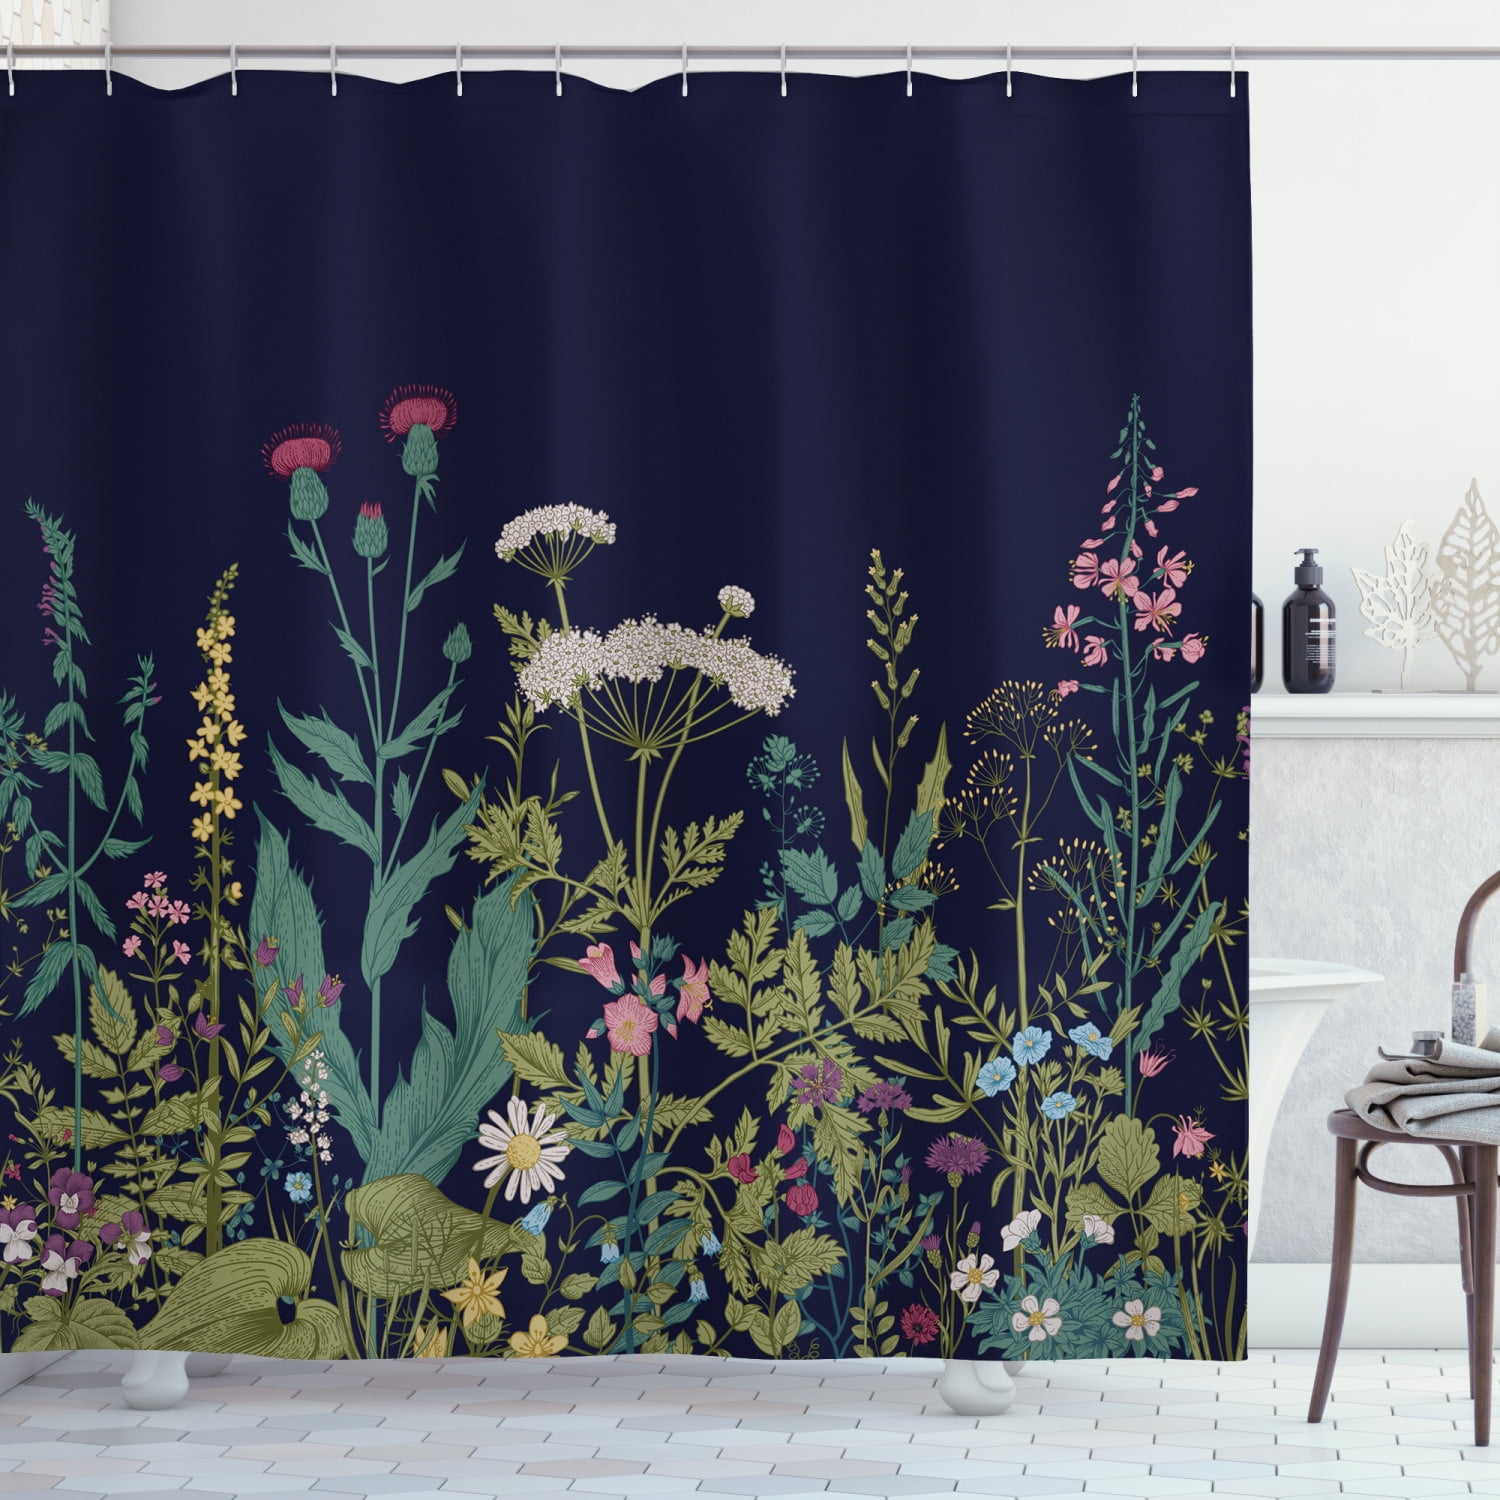 12 Hooks Cartoon Lotus and Fish Bathroom Accessories Fabric Shower Curtain Sets 